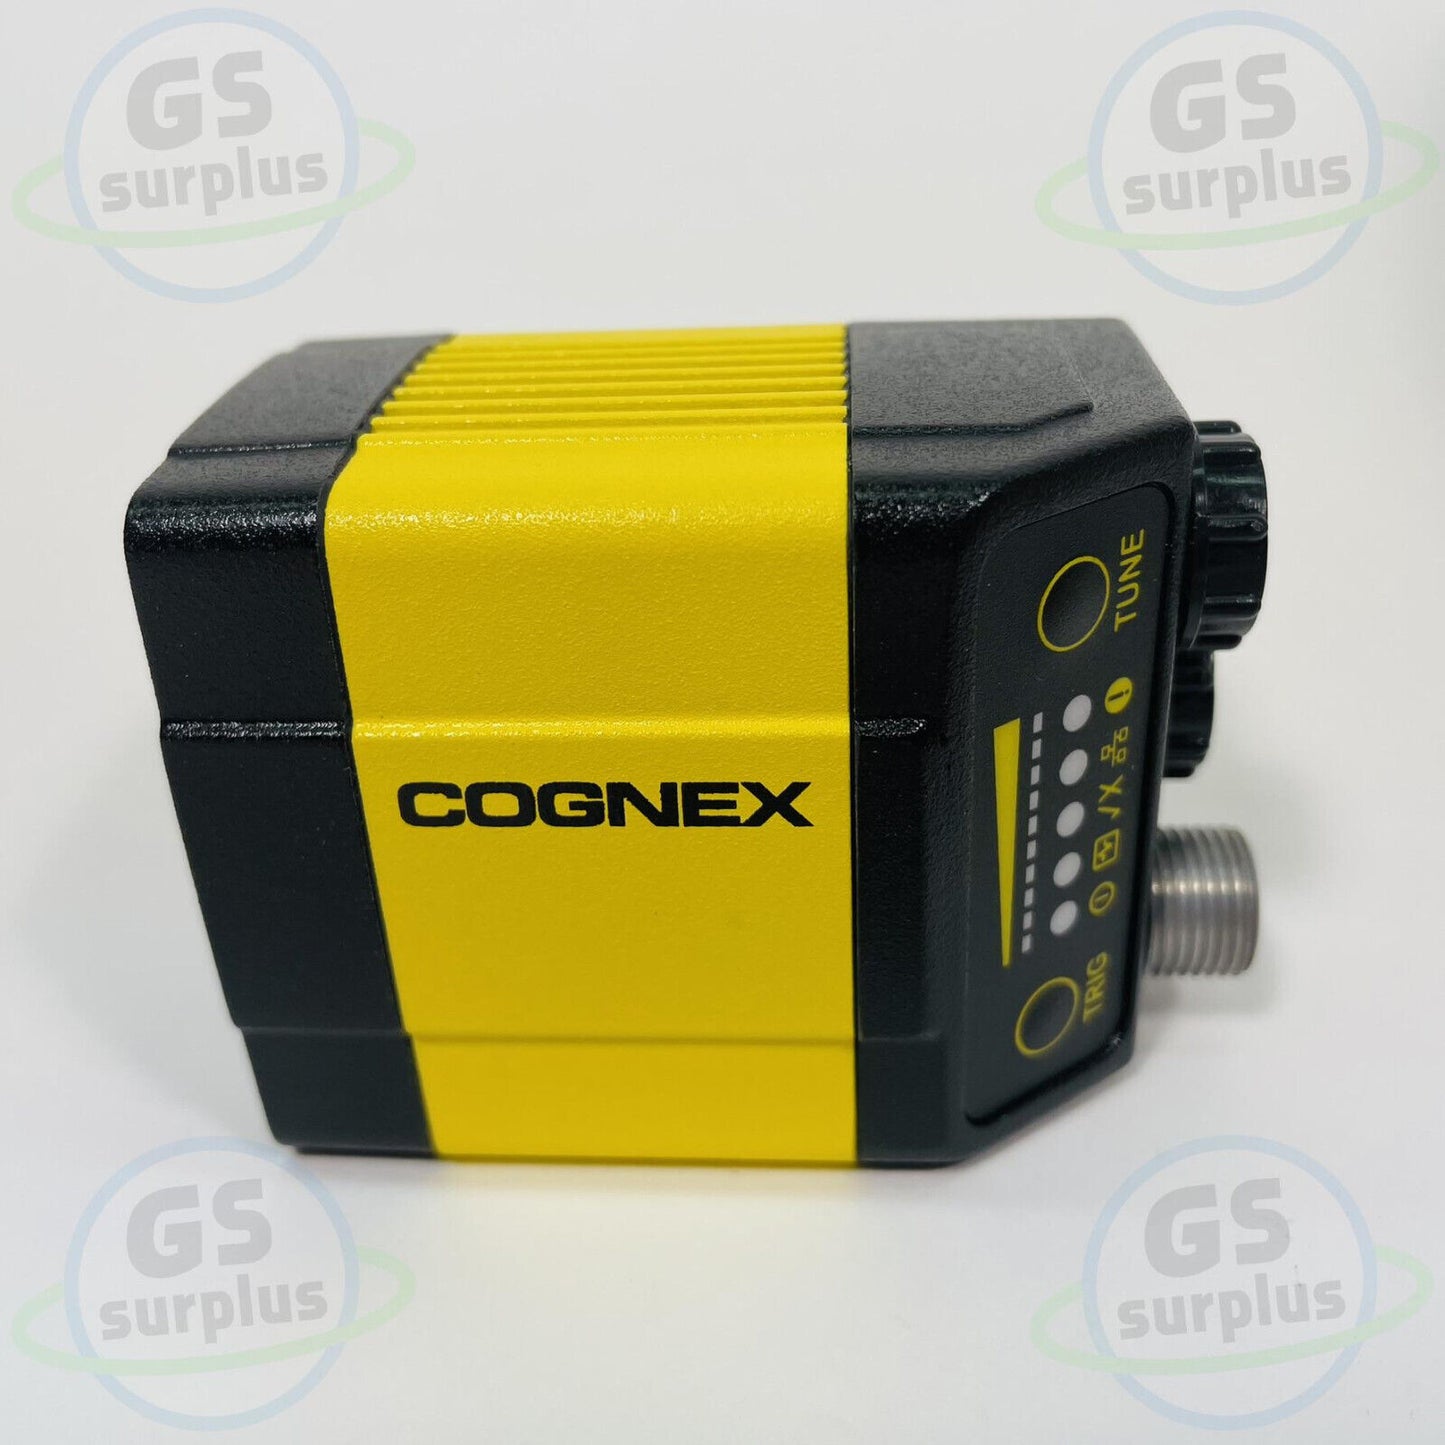 NEW Cognex DMR-303X-00 / 828-0407-1RDataman ID Reader